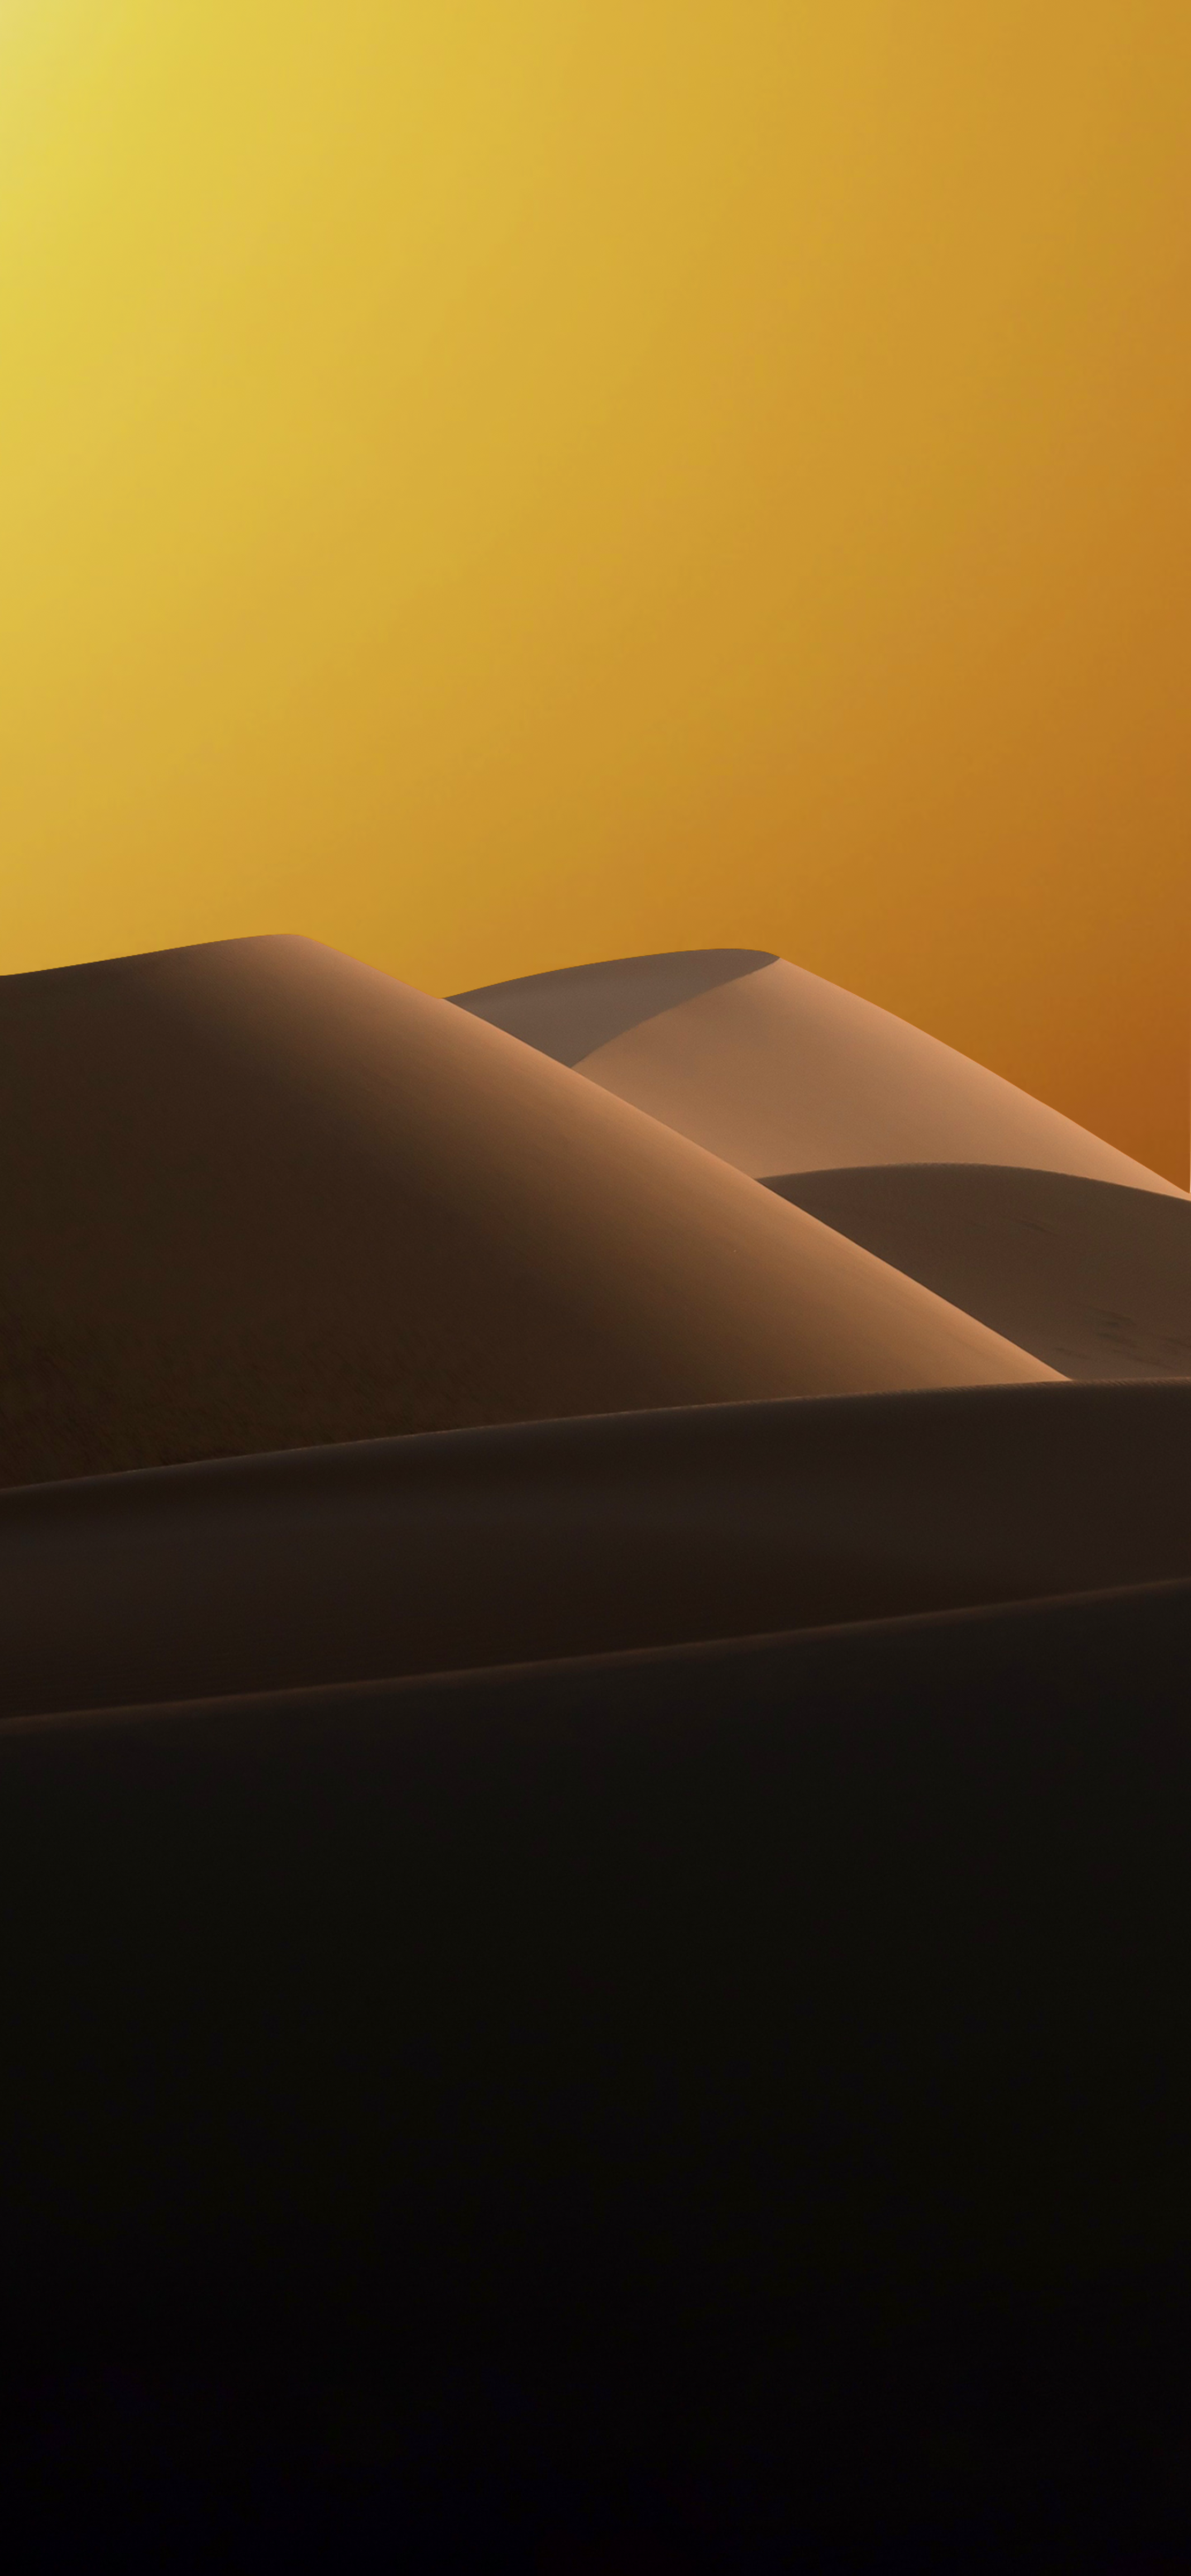 Fondos de pantalla de dunas en amanecer